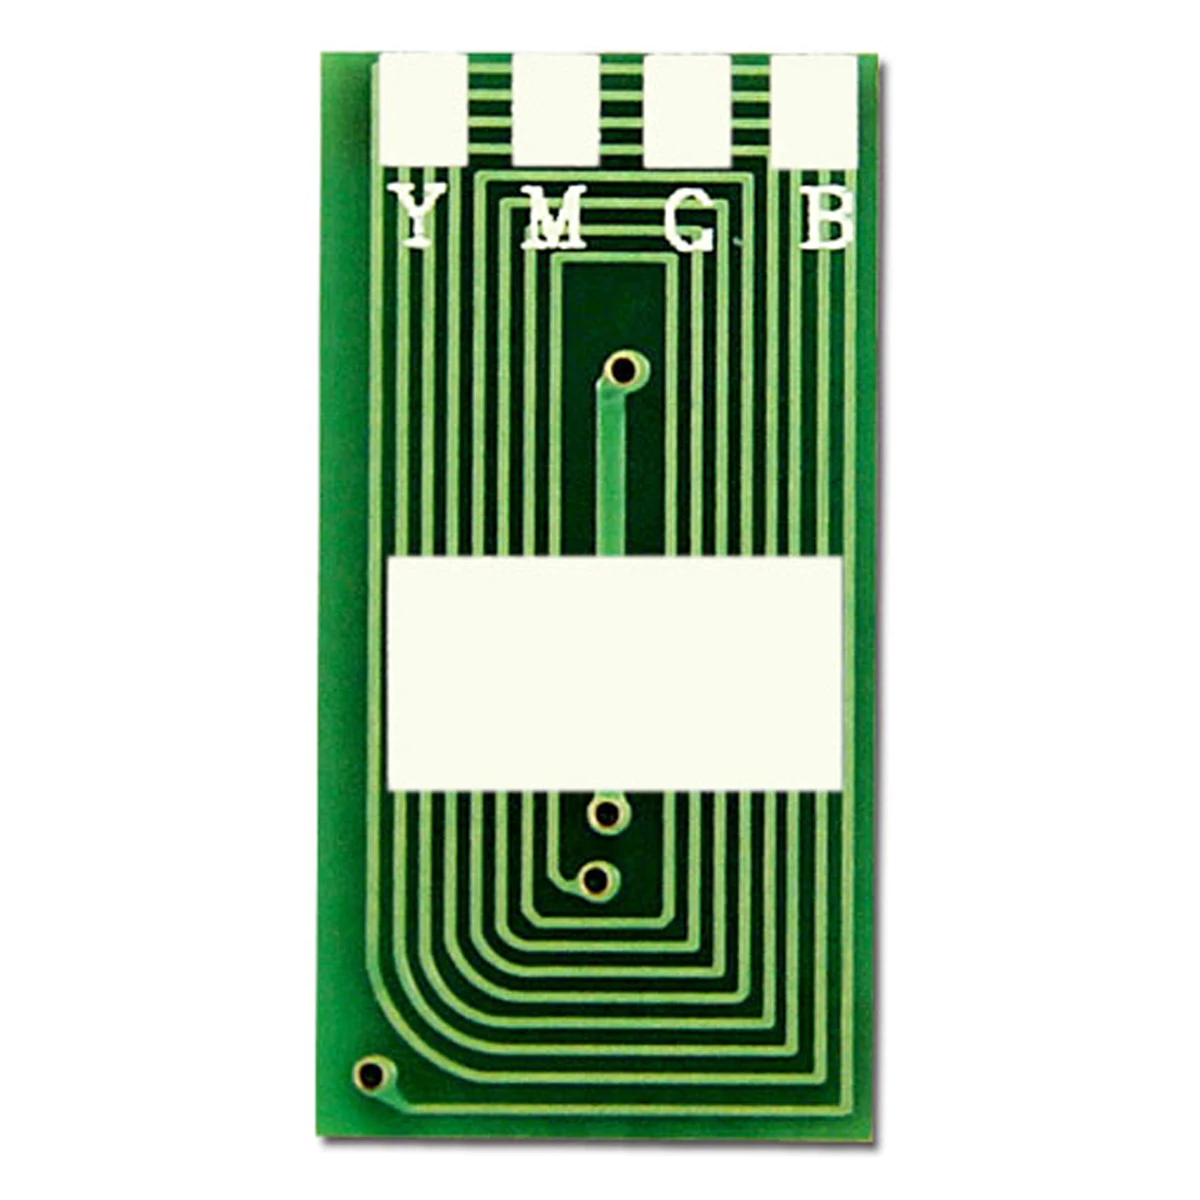 

20PCS High Quality Toner Reset Chip 406687 for Ricoh SP5200 SP5210 SP 5200 SP 5210 Cartridge Reset Chip